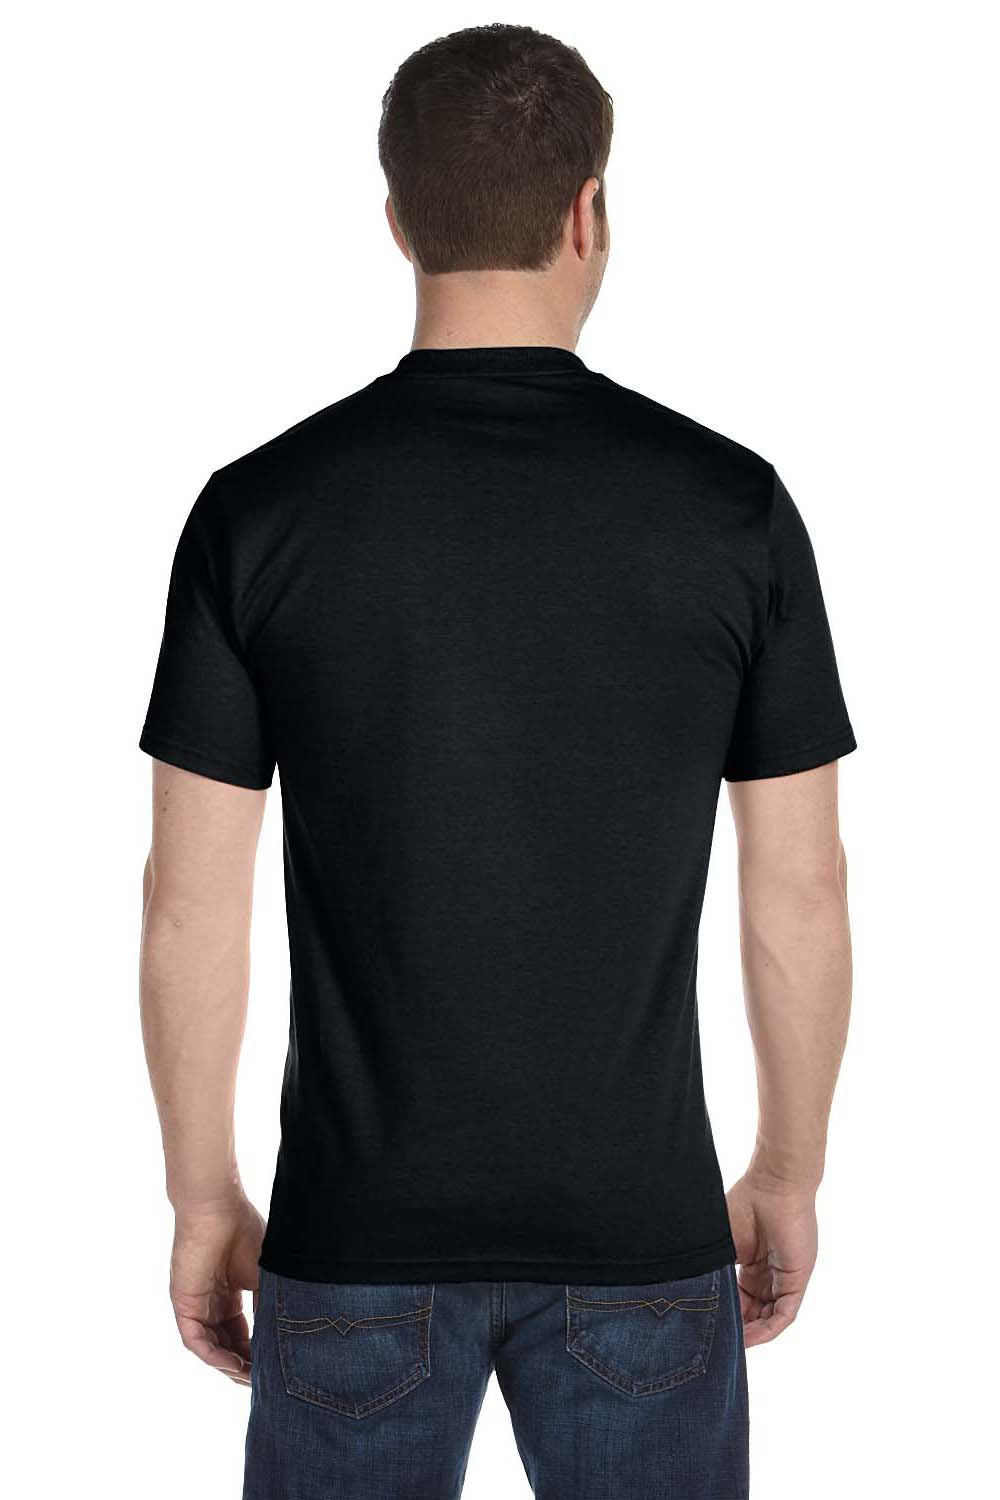 Gildan G800 Mens DryBlend Moisture Wicking Short Sleeve Crewneck T-Shirt Black Back